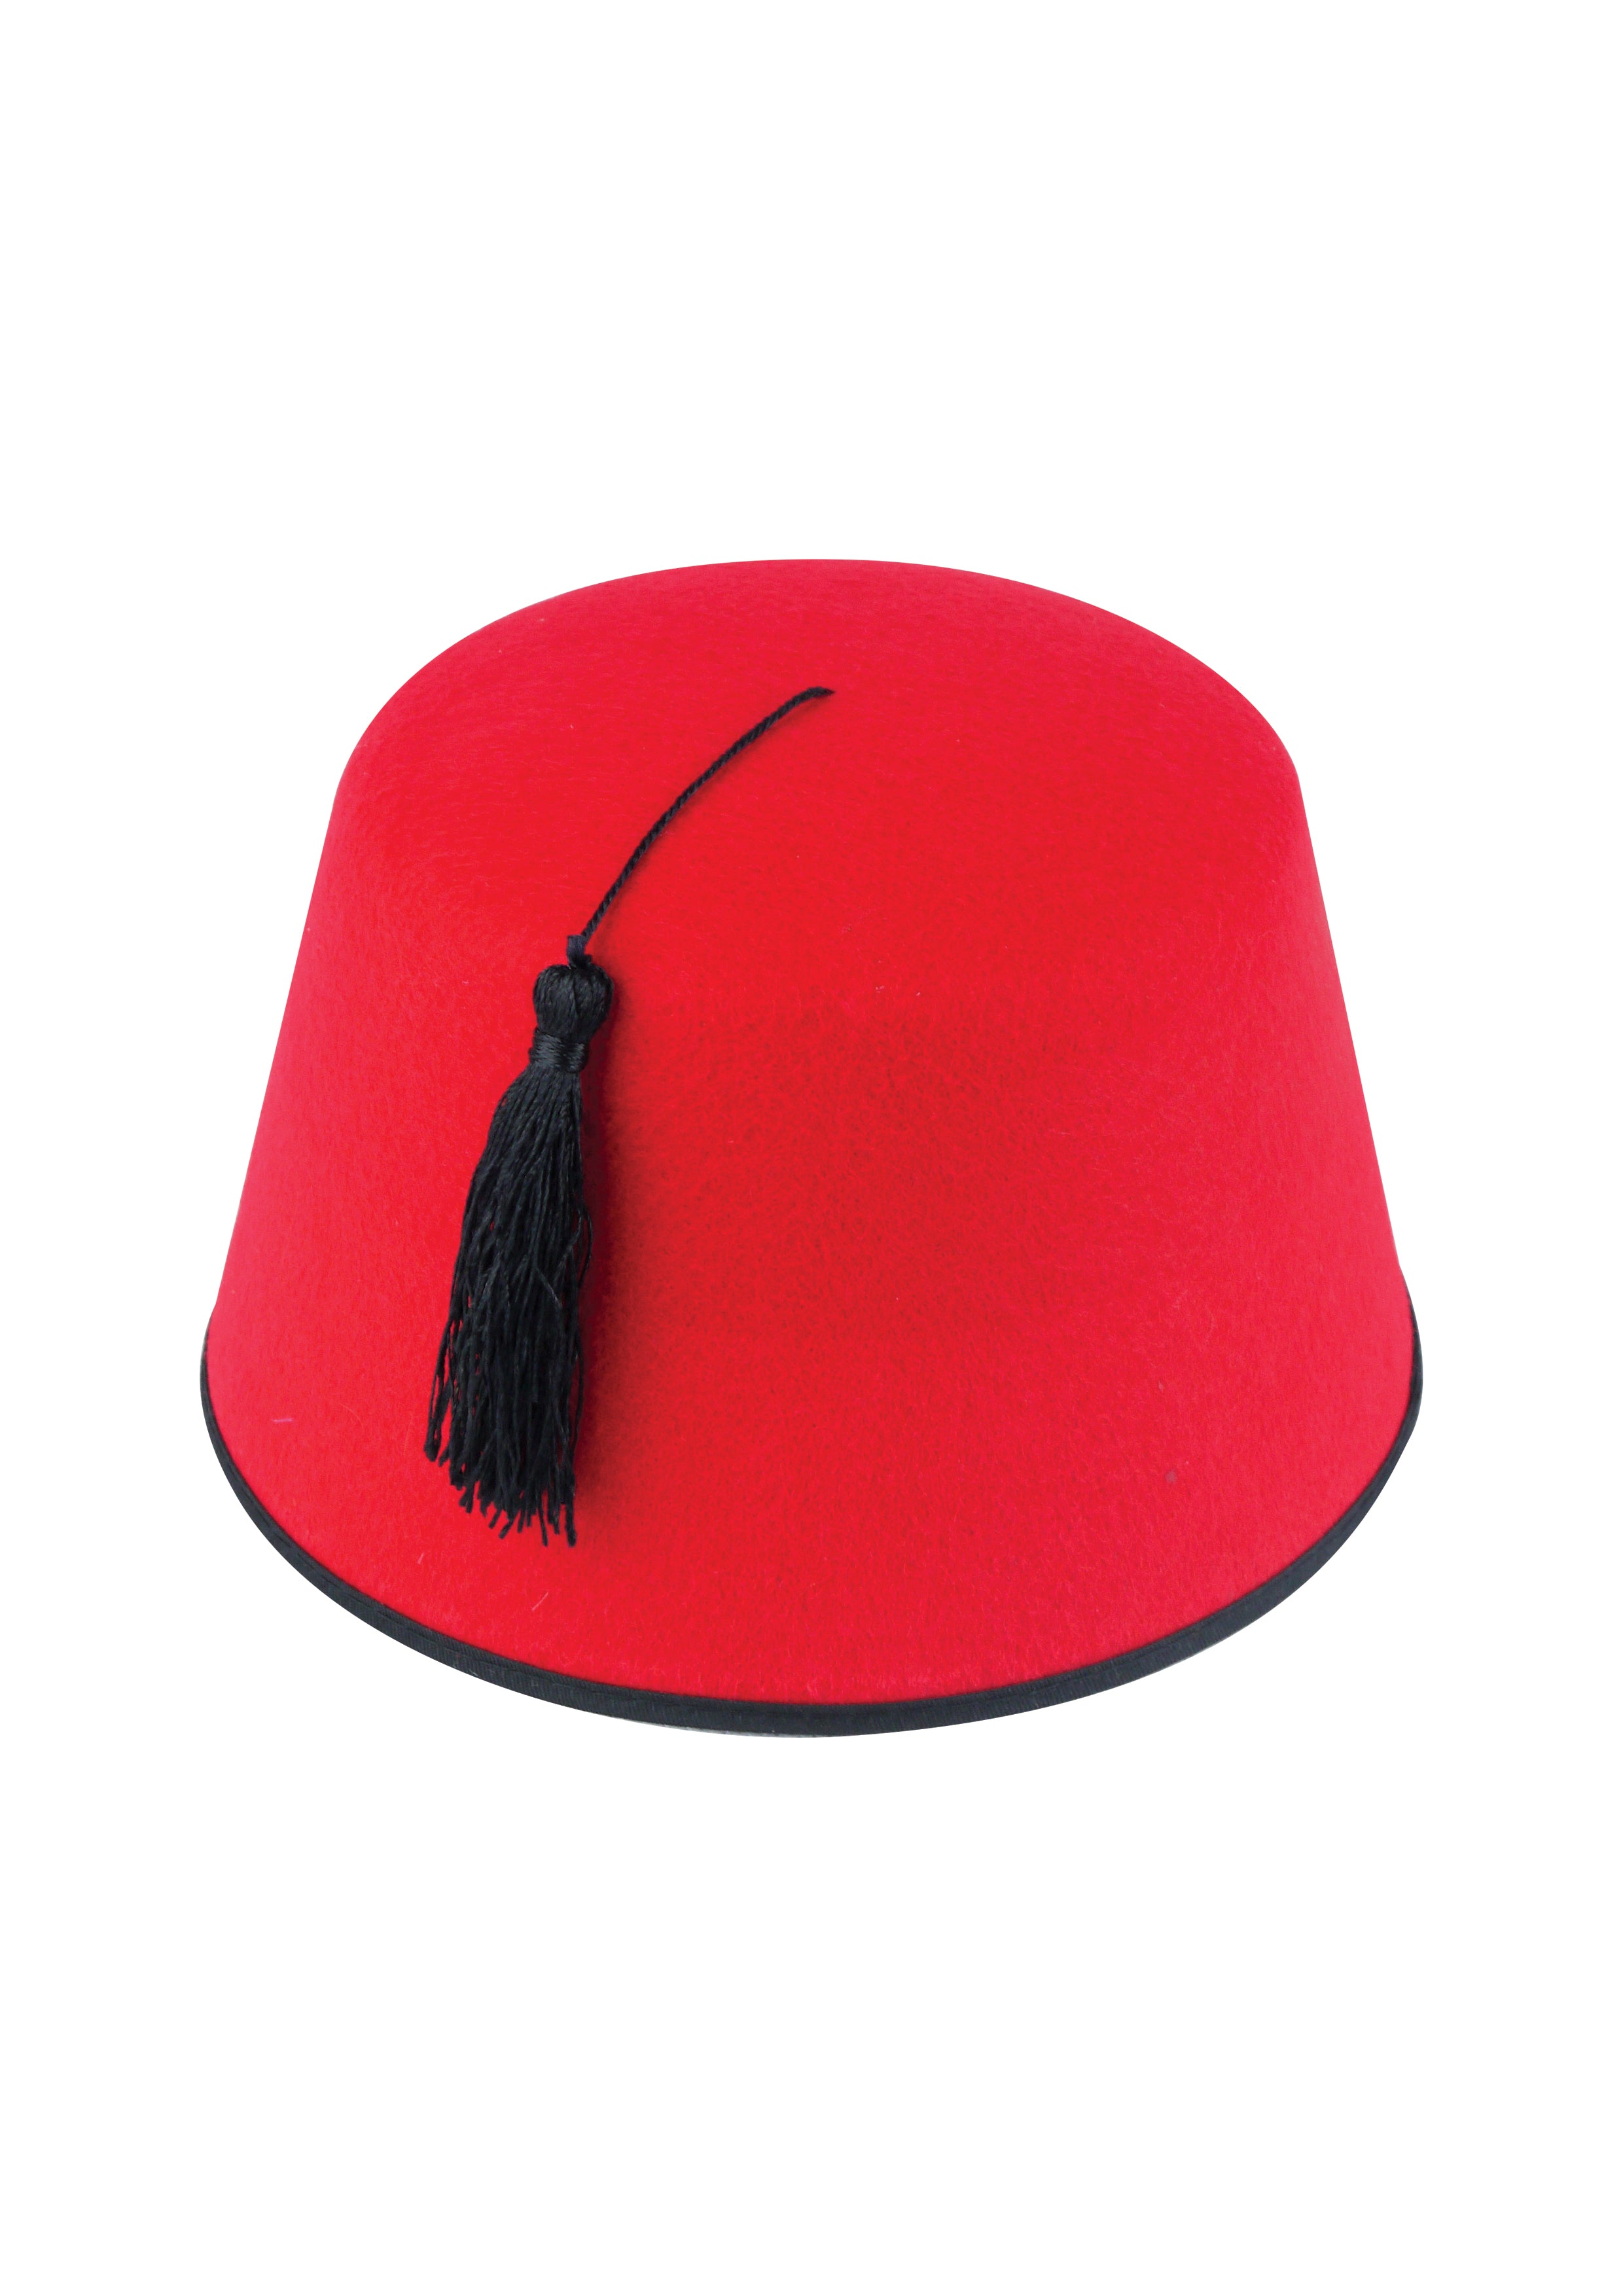 Red Fez Hat